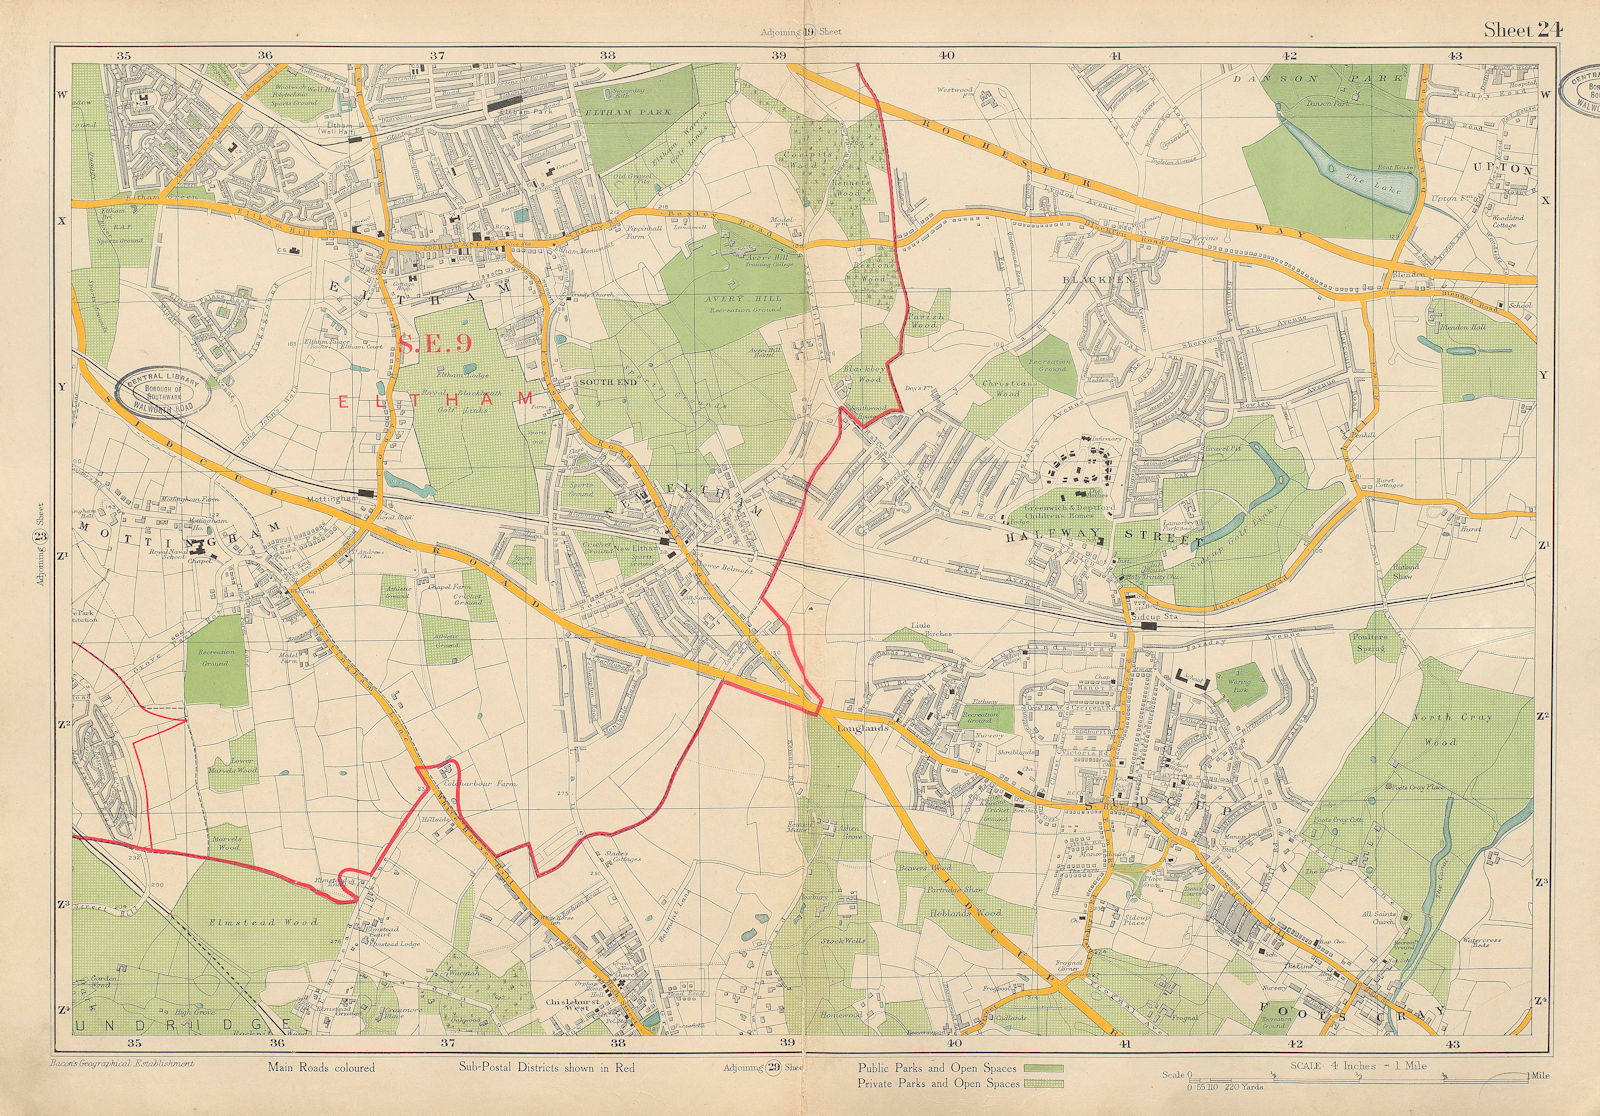 SIDCUP ELTHAM Chislehurst West Mottingham Bexley Foots Cray. BACON 1934 map